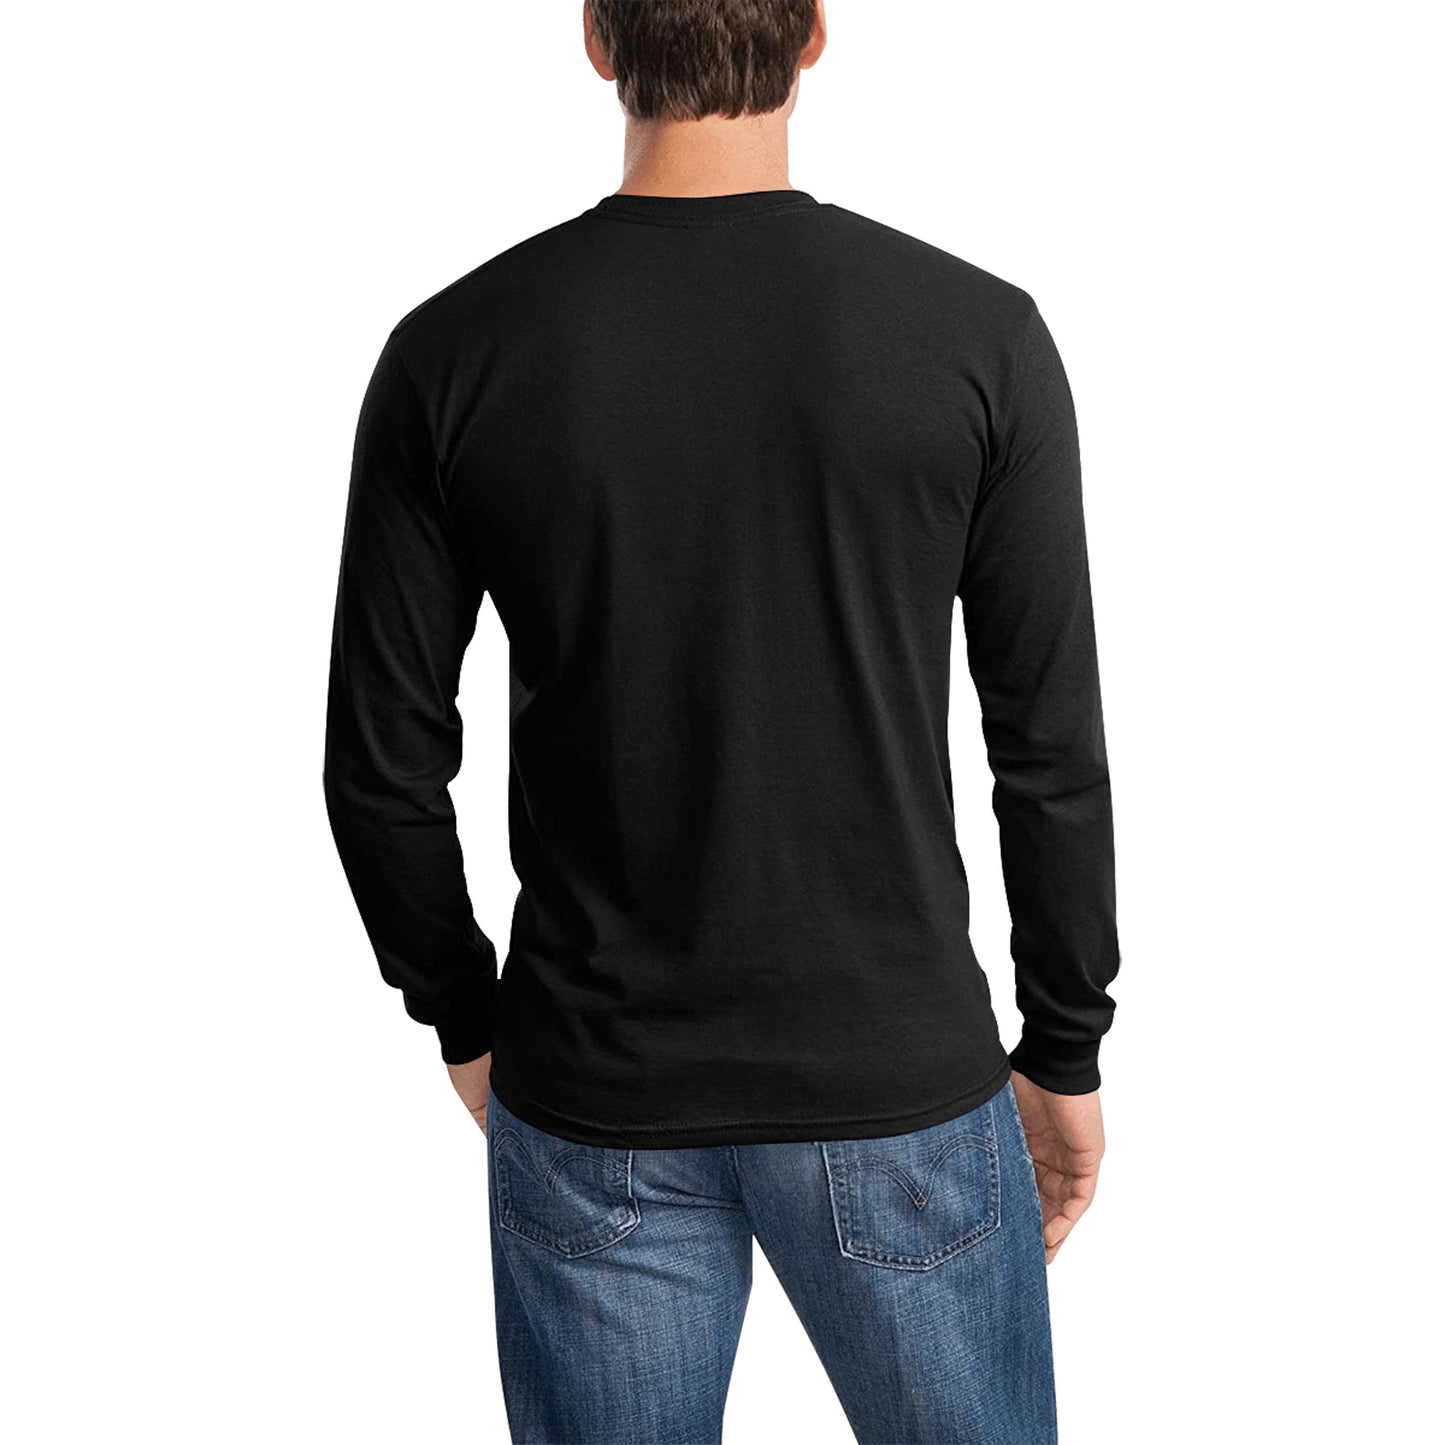 Jet Black Collection Men's Long Sleeve T-shirt(ModelT51) - ELITA IMPERIA INC.